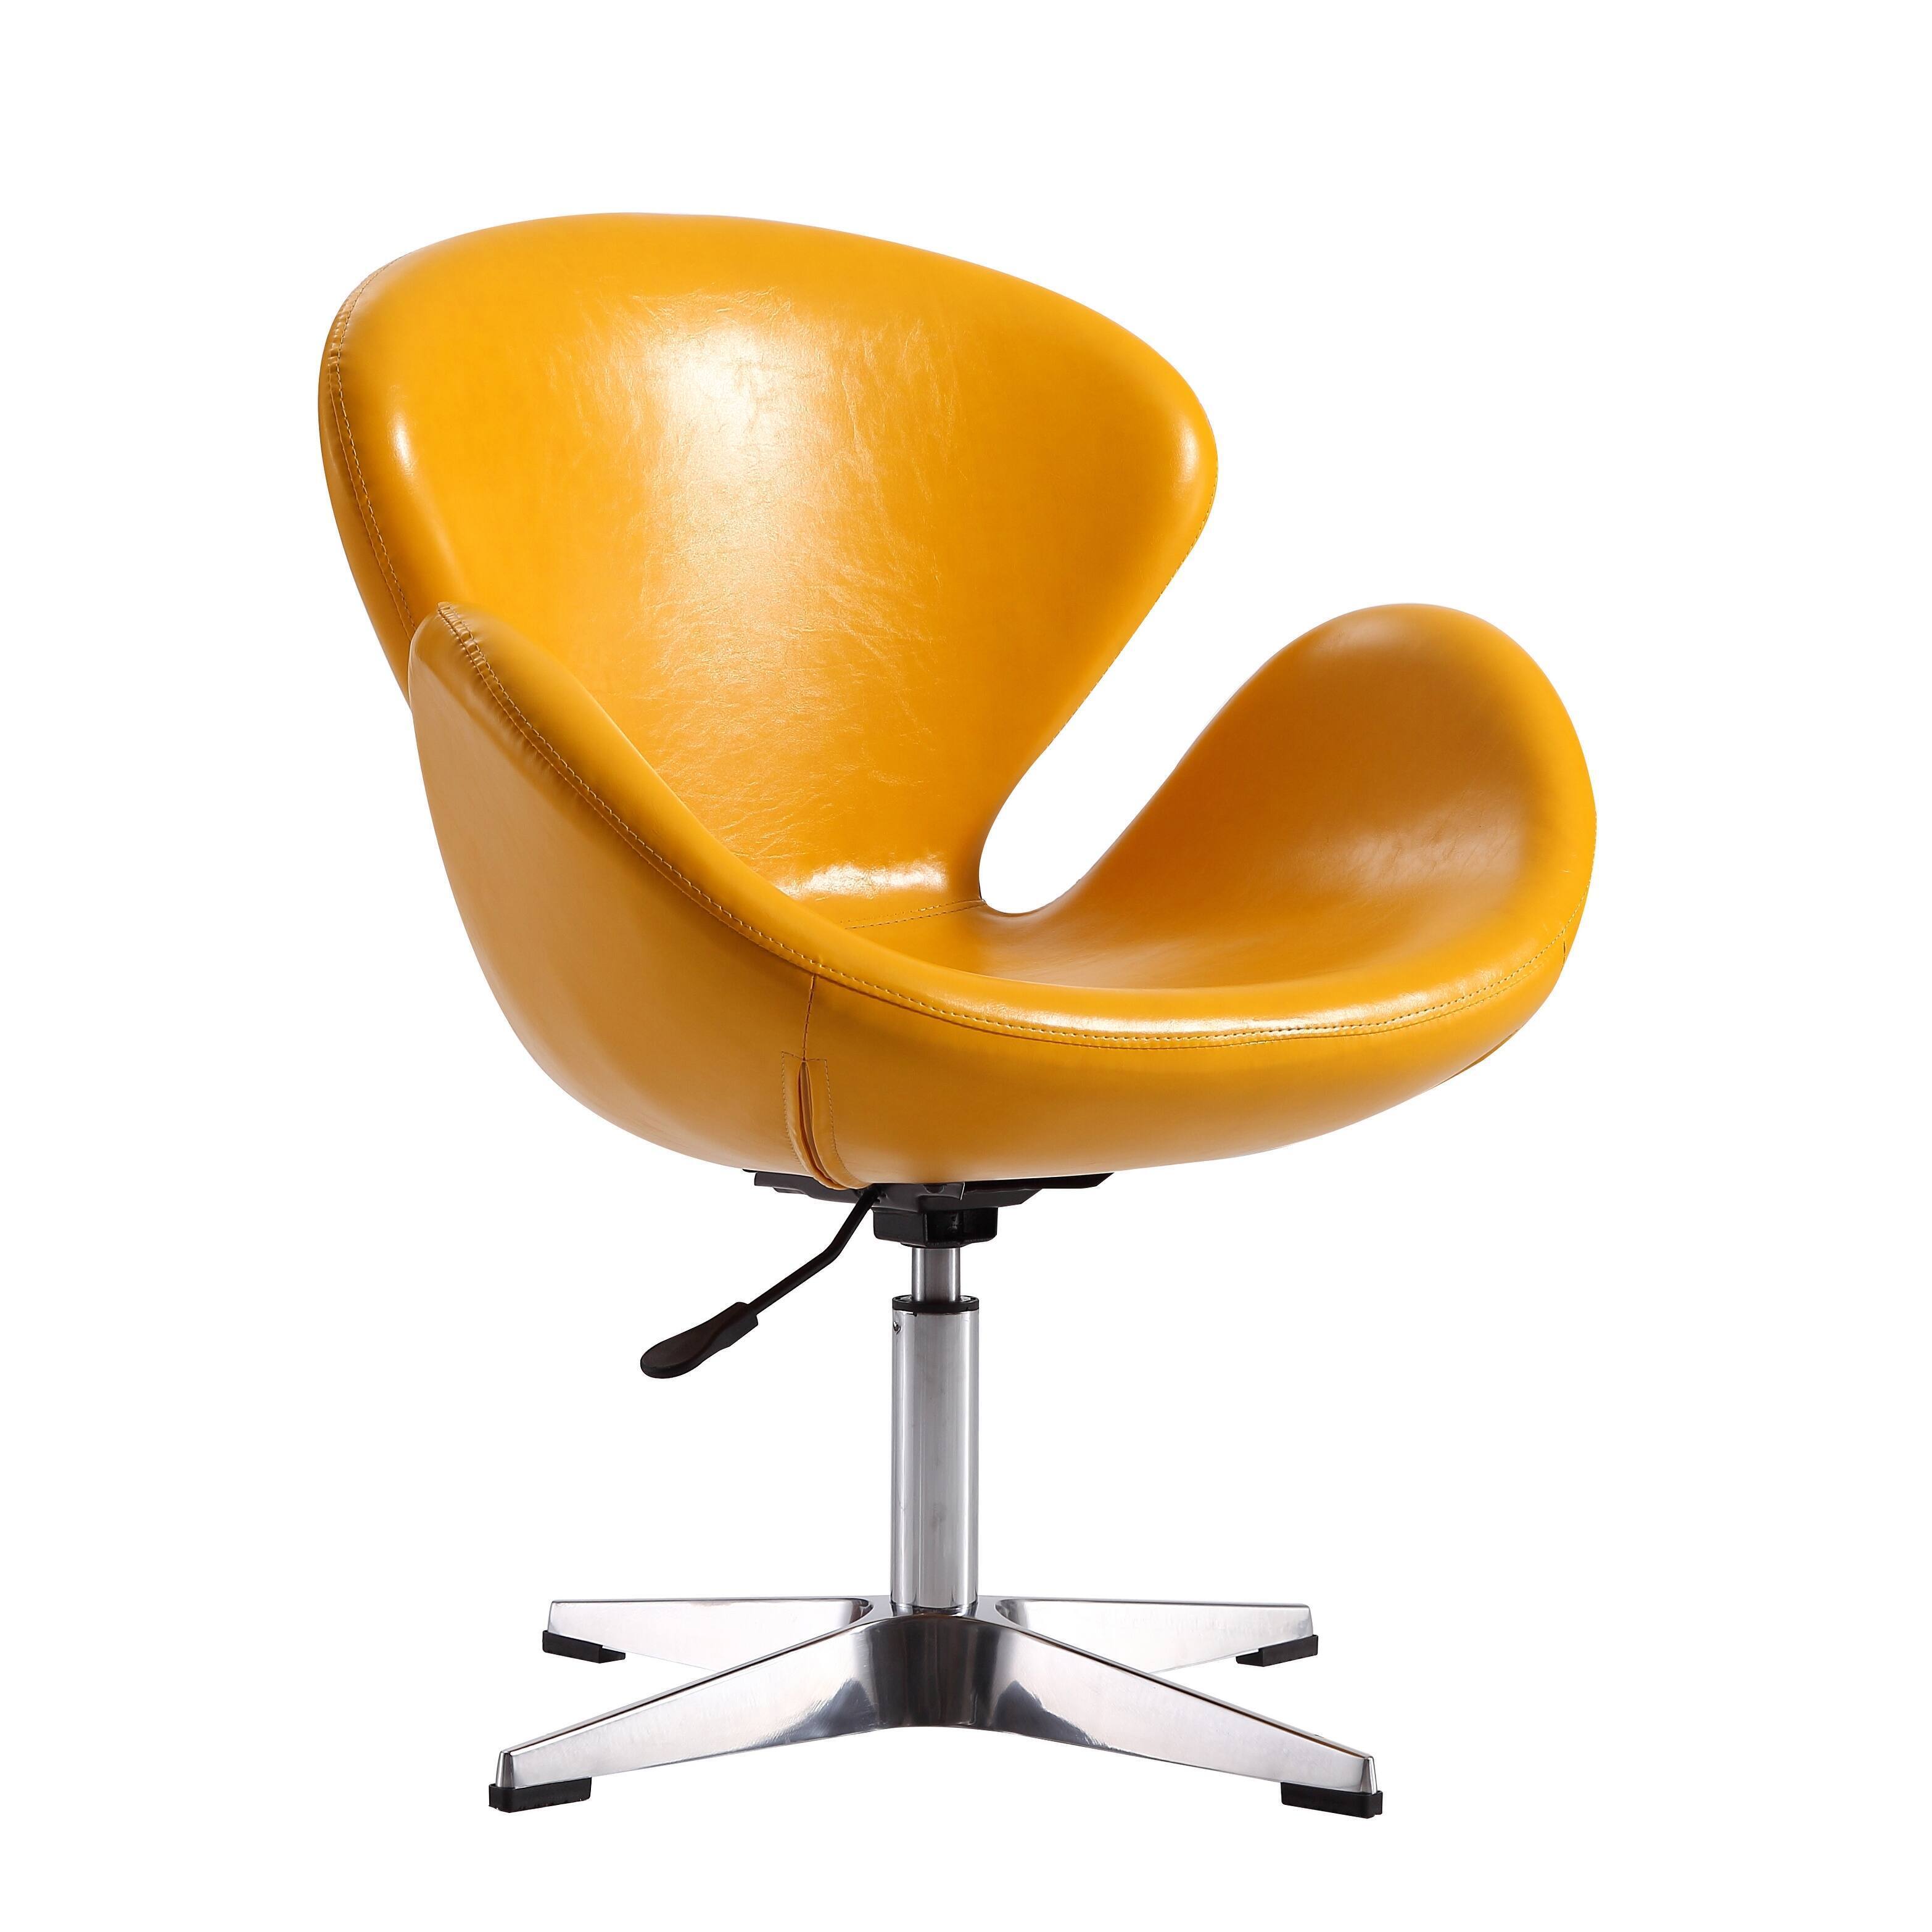 Vintage danish modern furniture: swivel chairs